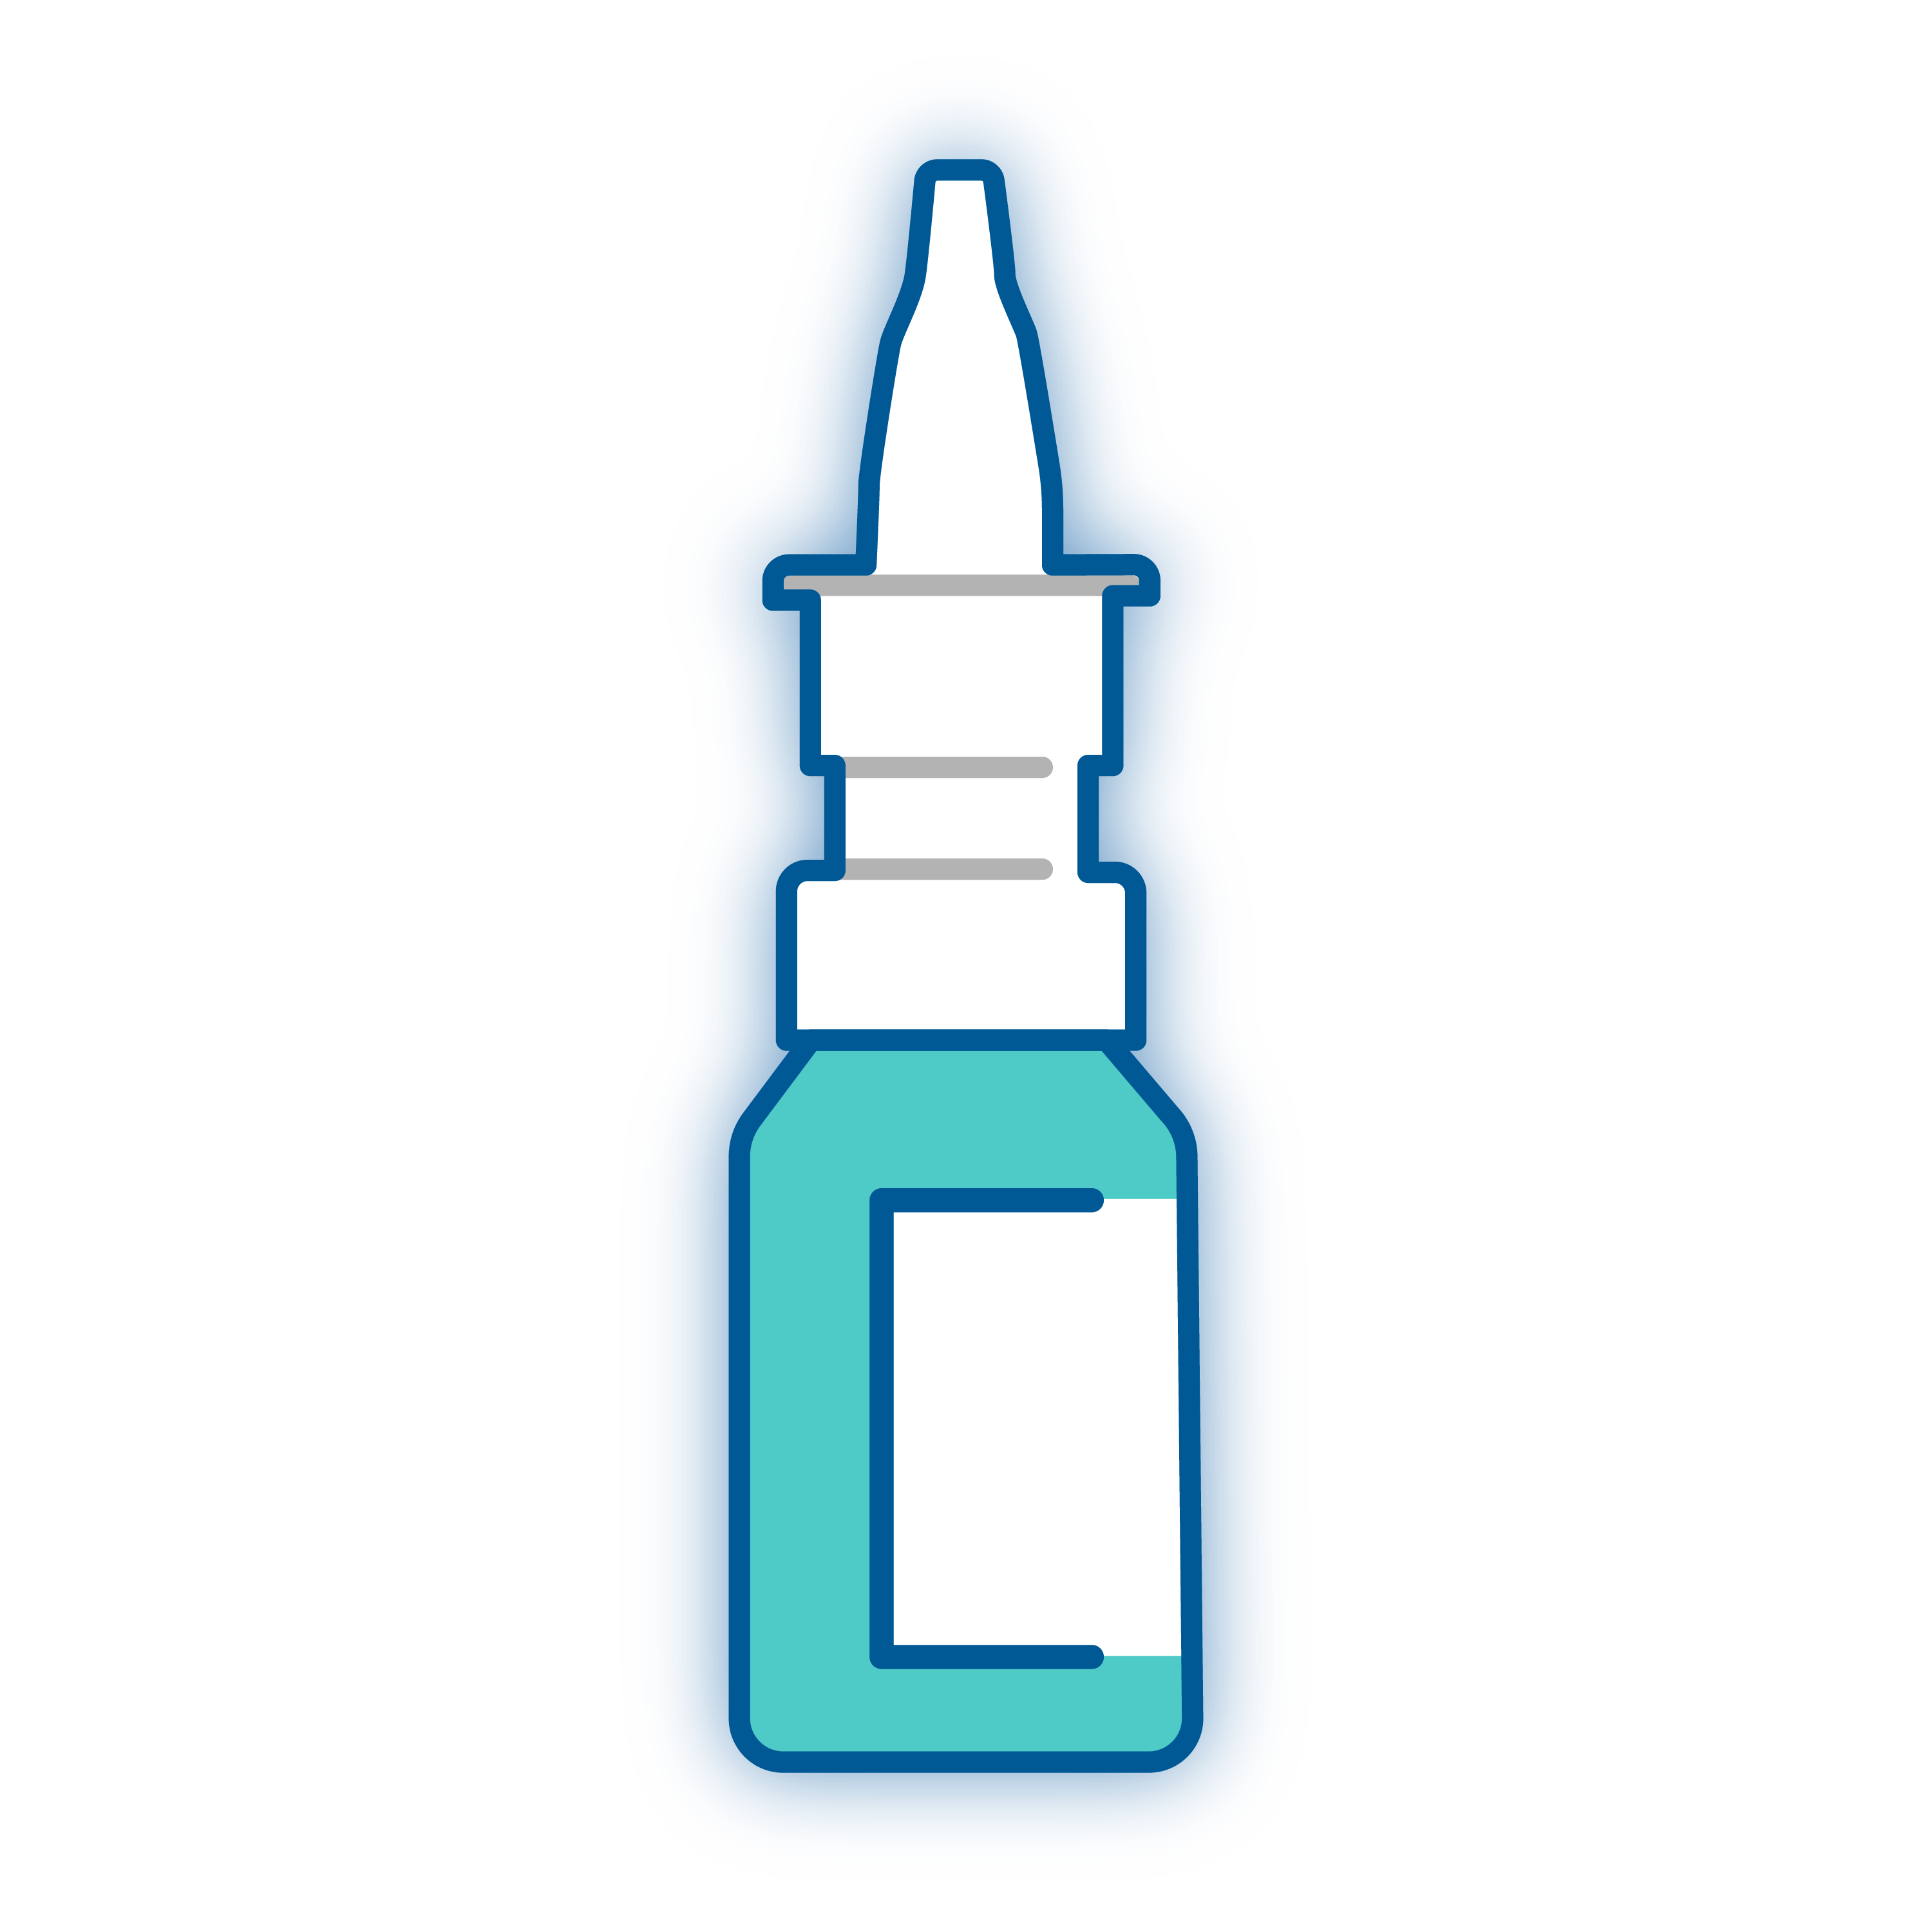 Preservative-containing nasal sprays: